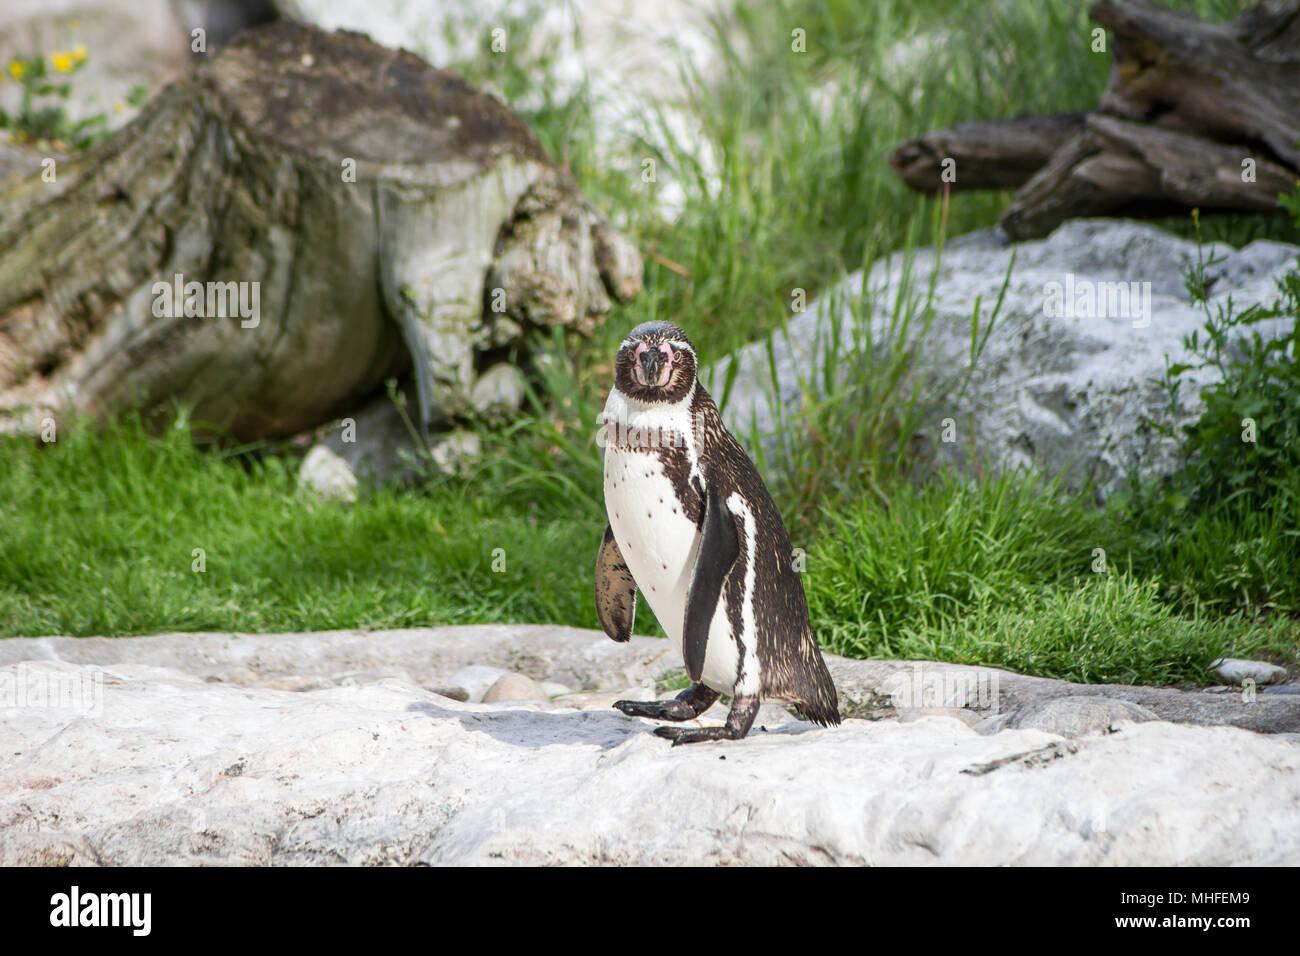 Blackfooted penguin (Spheniscus demersus) in a zoo Stock Photo